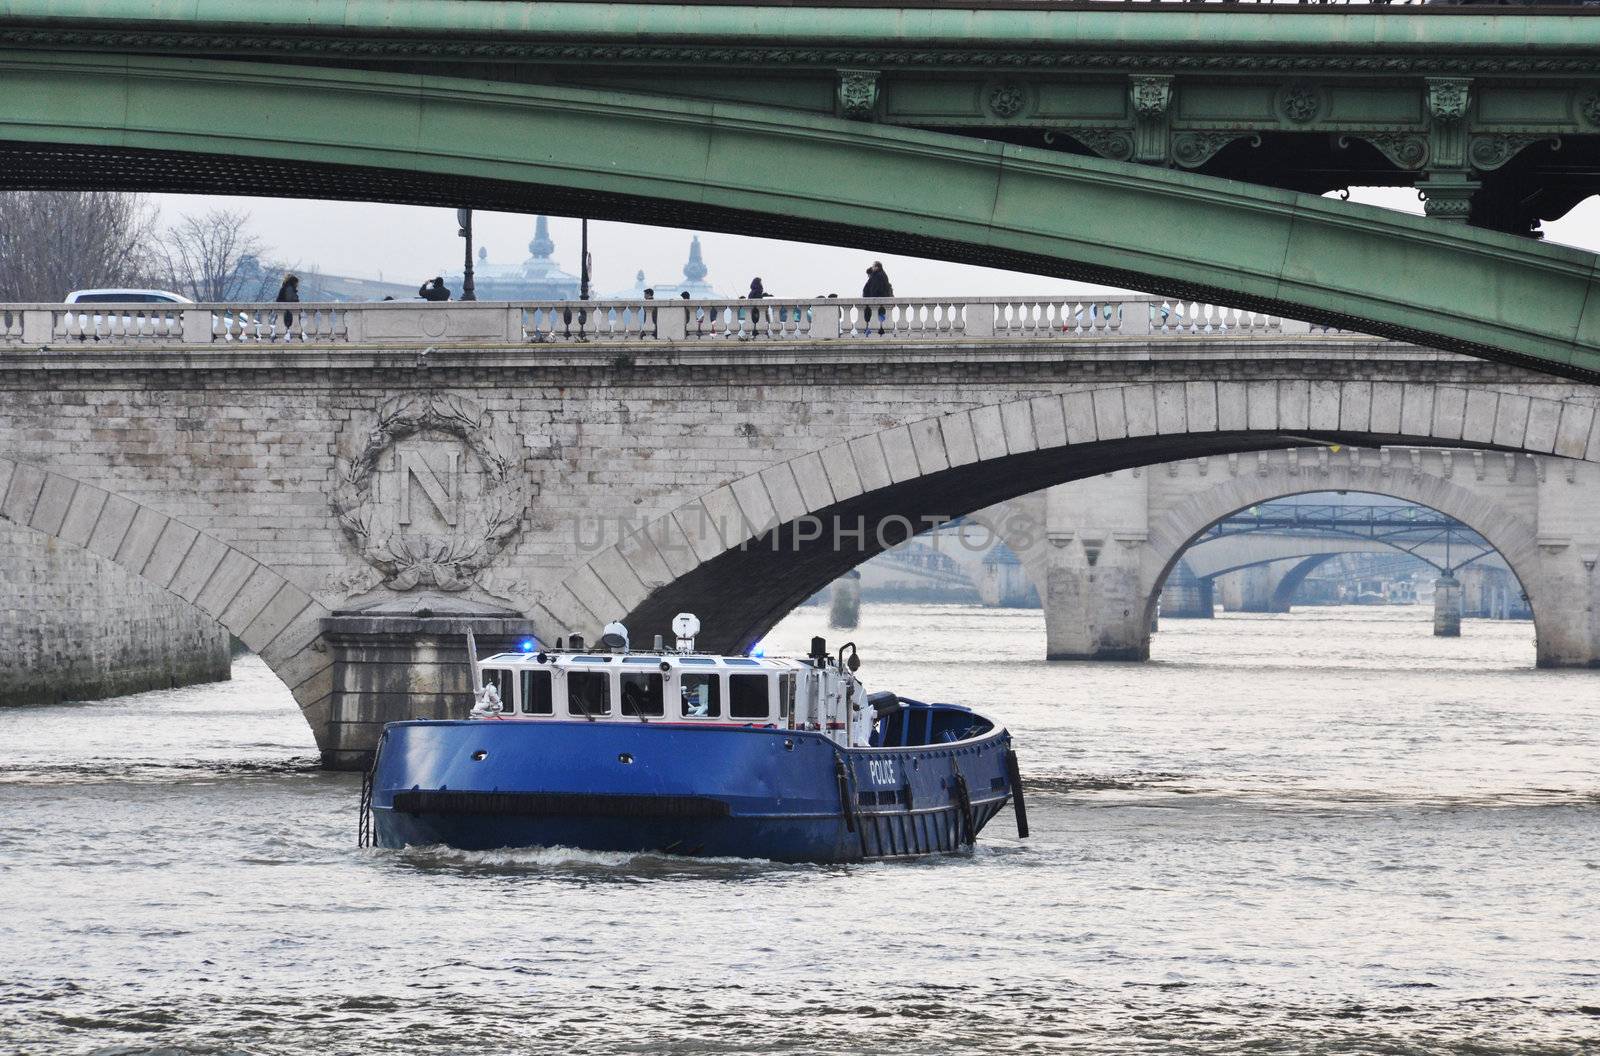 Police boat on the river Seine, Paris by dutourdumonde